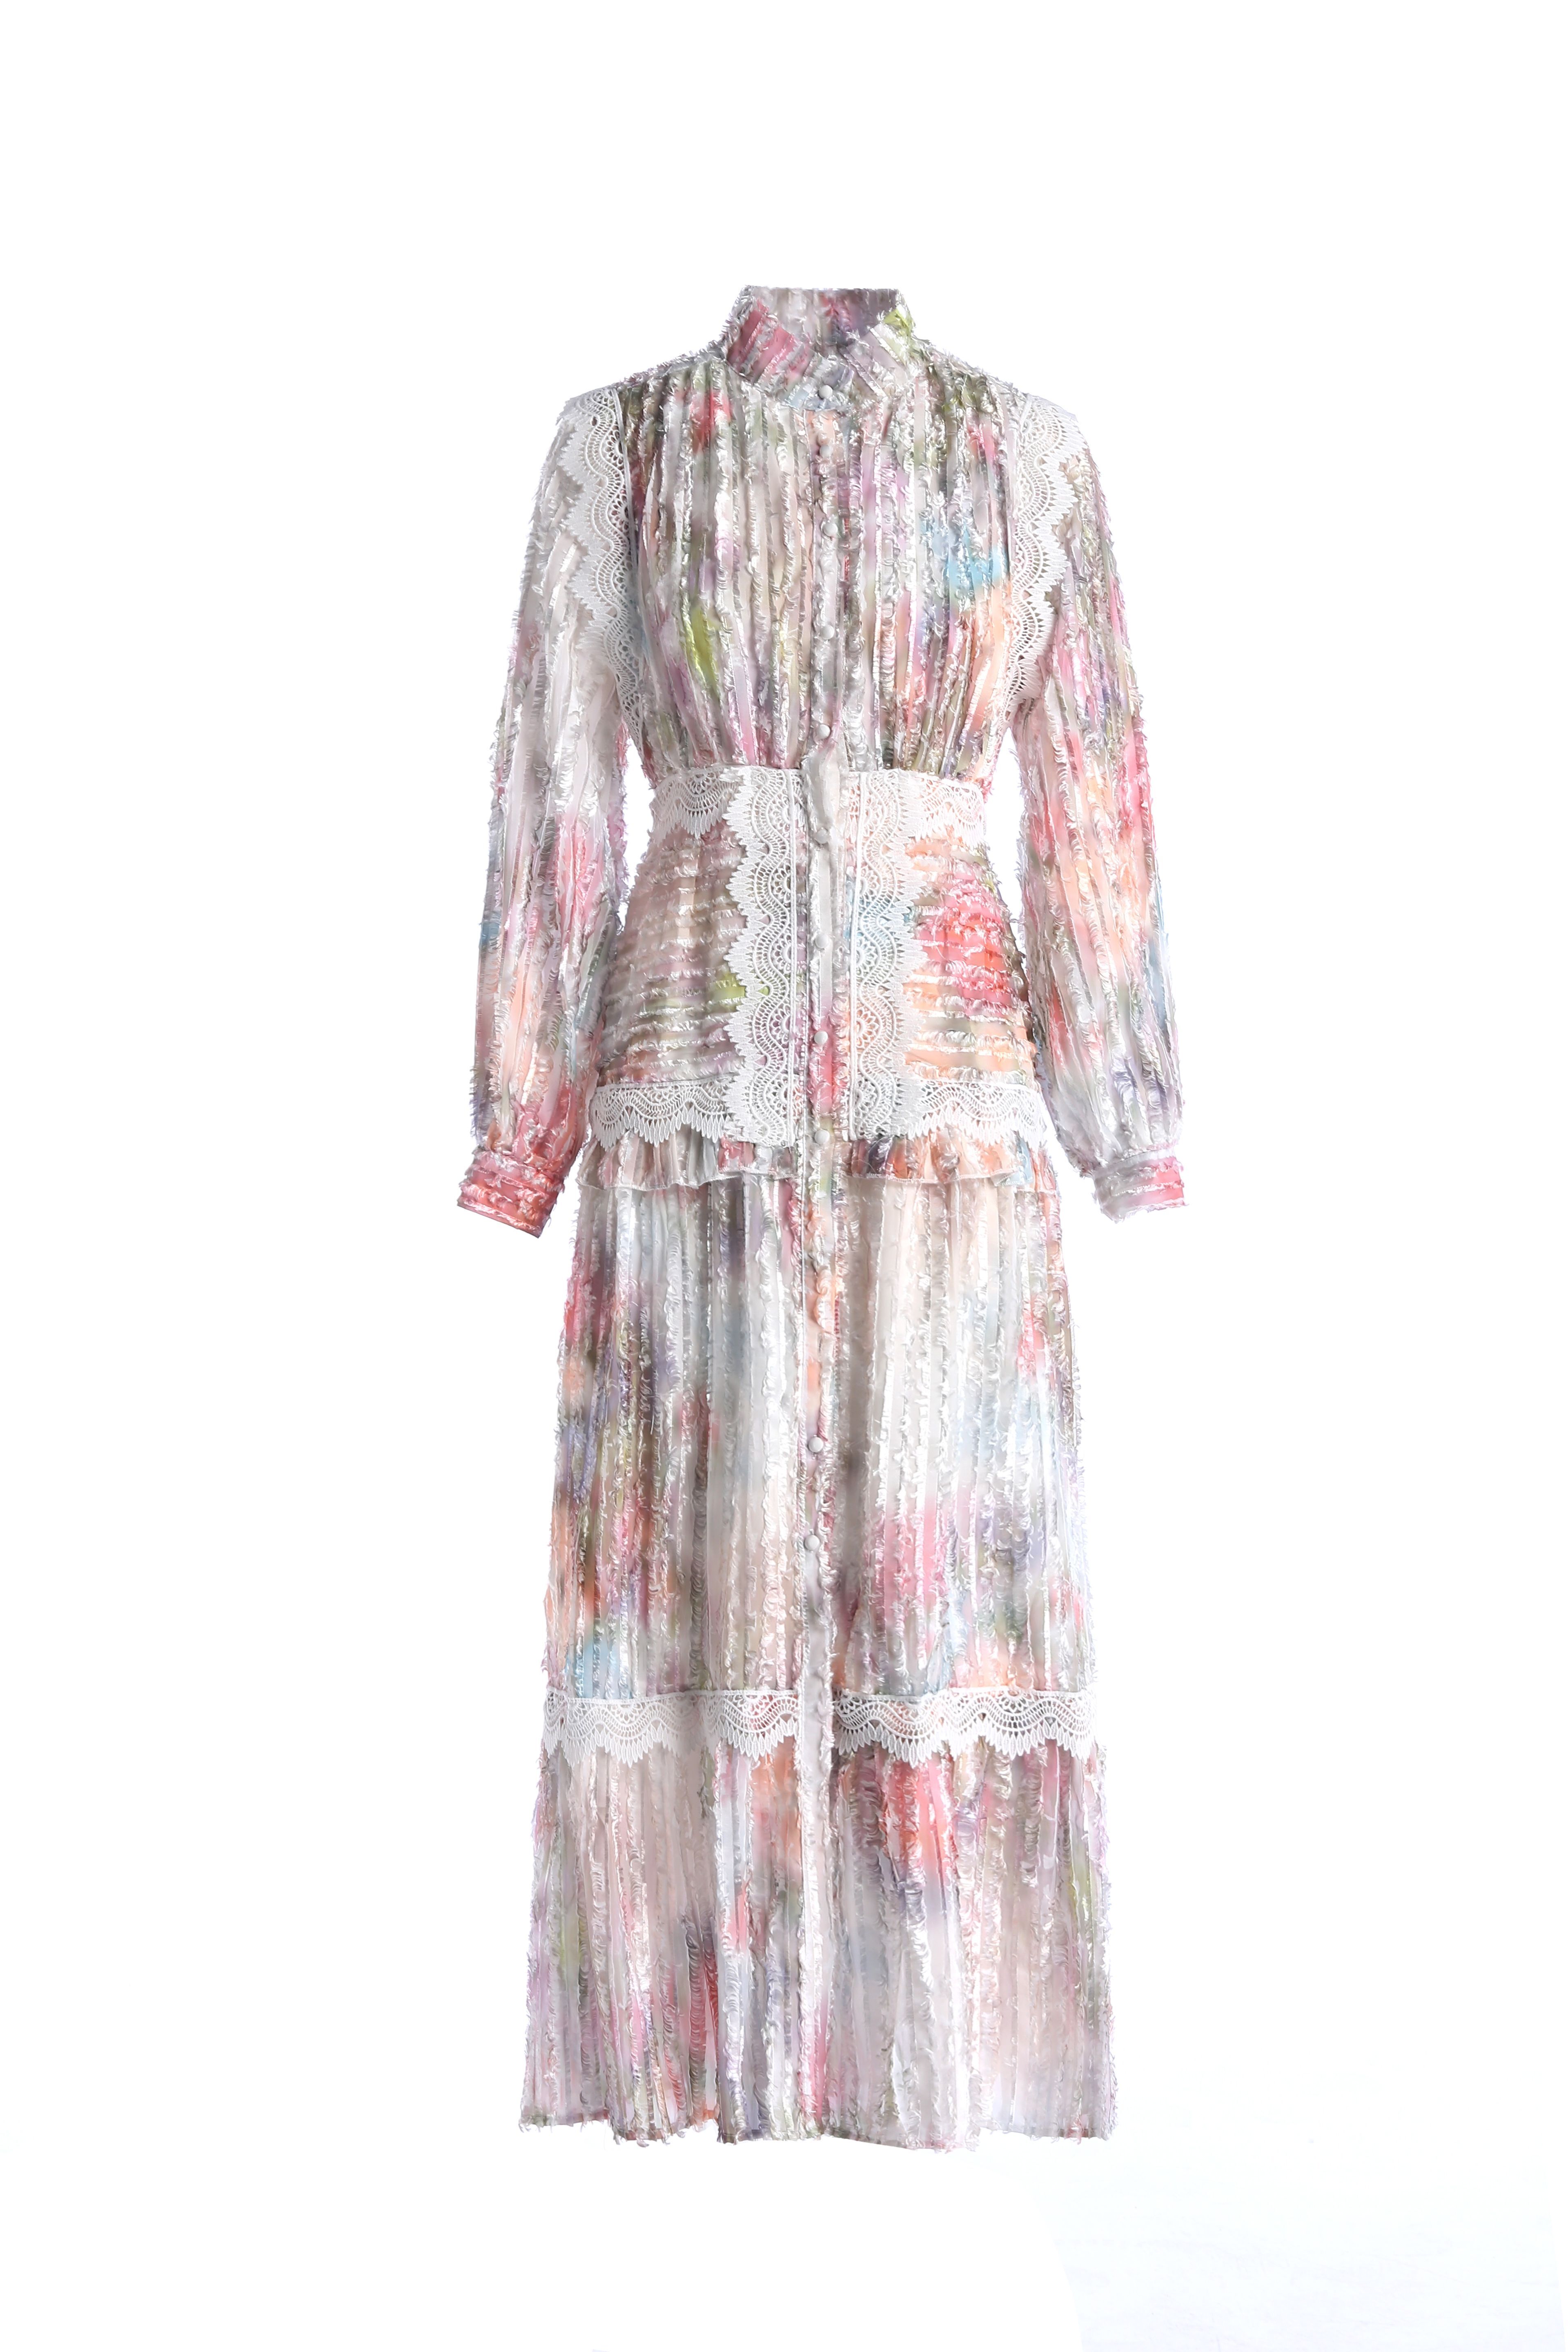 Comino Couture London Pastel meringue lace maxi dress - Harvey Nichols